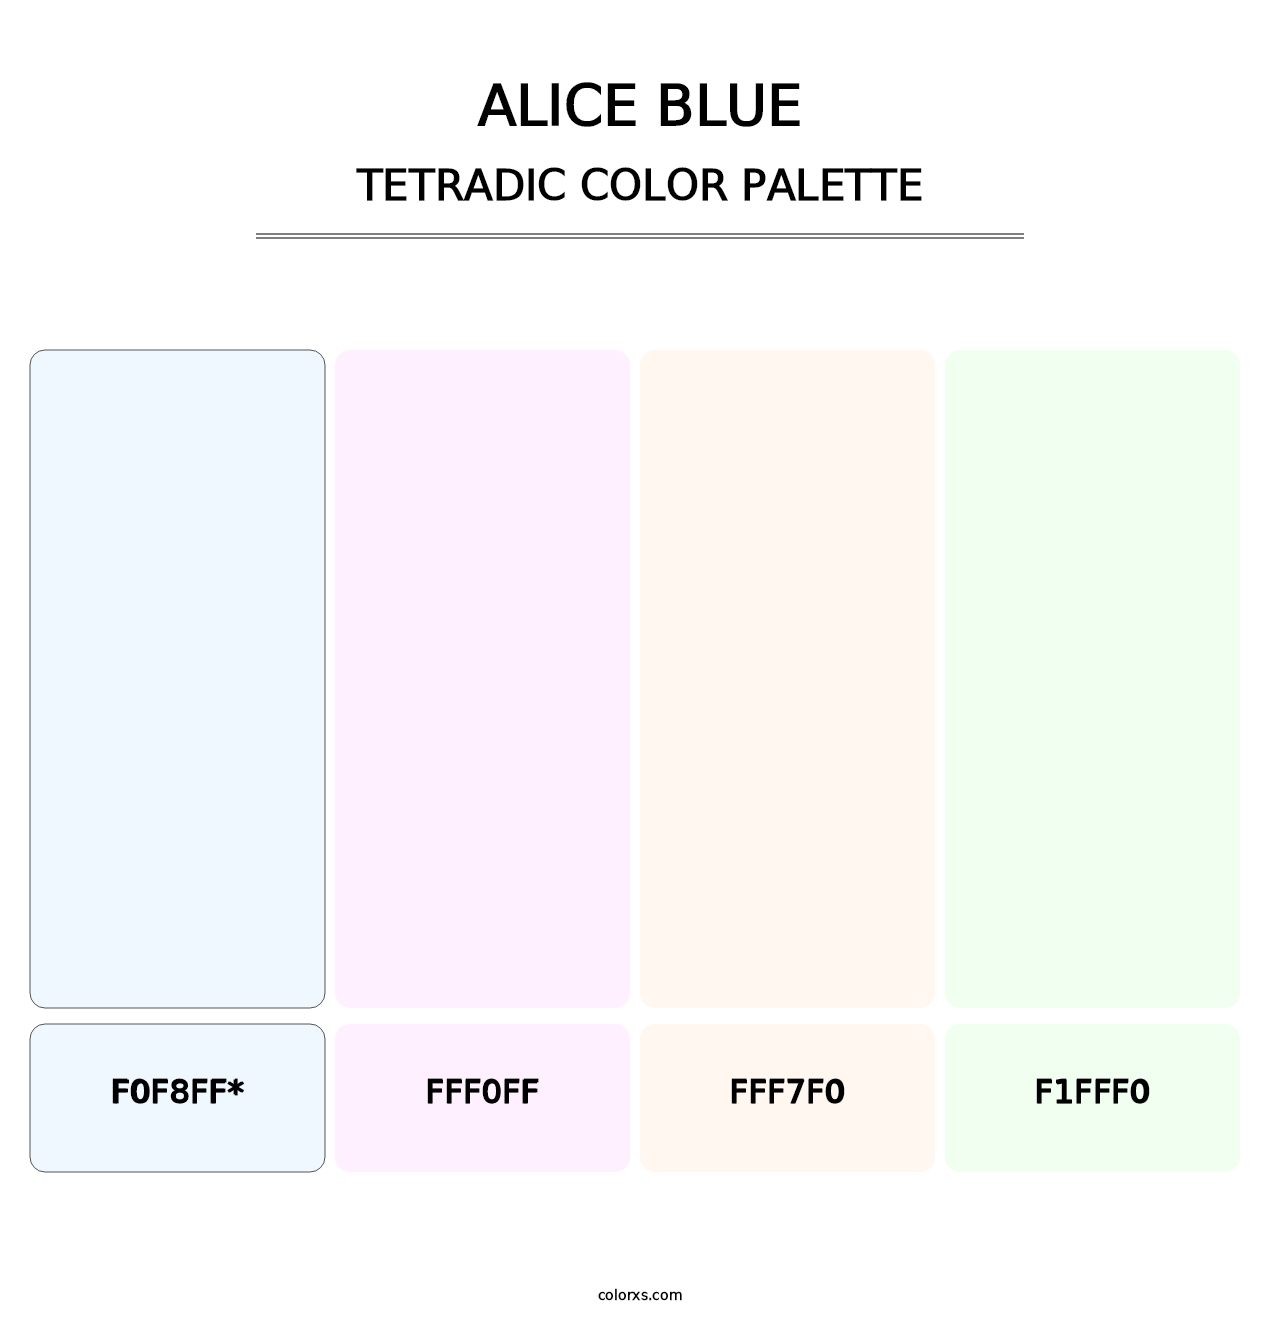 Alice blue - Tetradic Color Palette